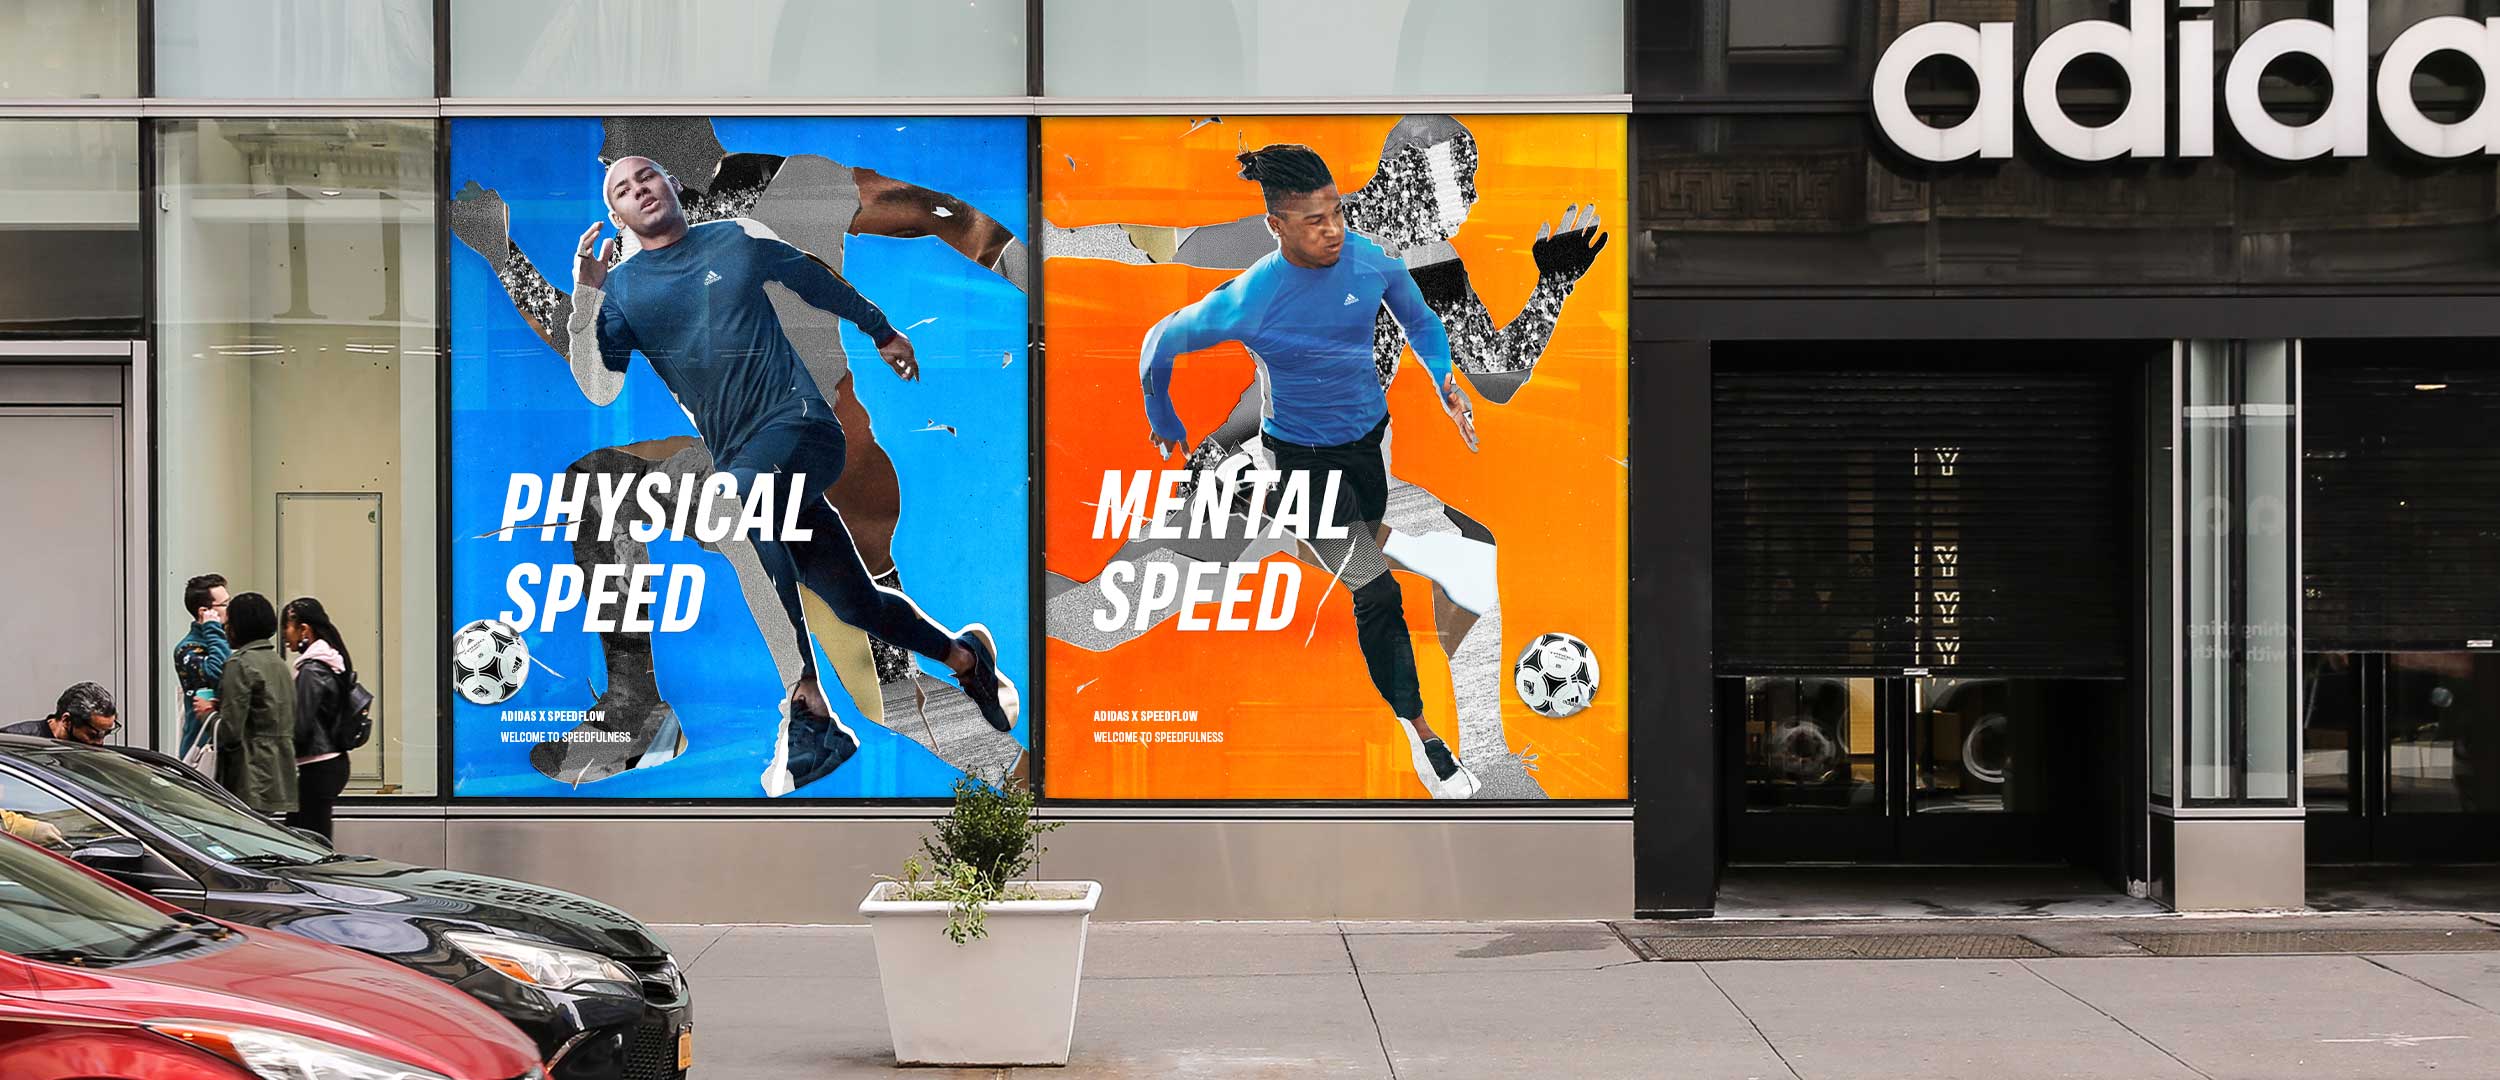 AdidasFootball_Concept_01_Billboard_01_FlorianStumpe